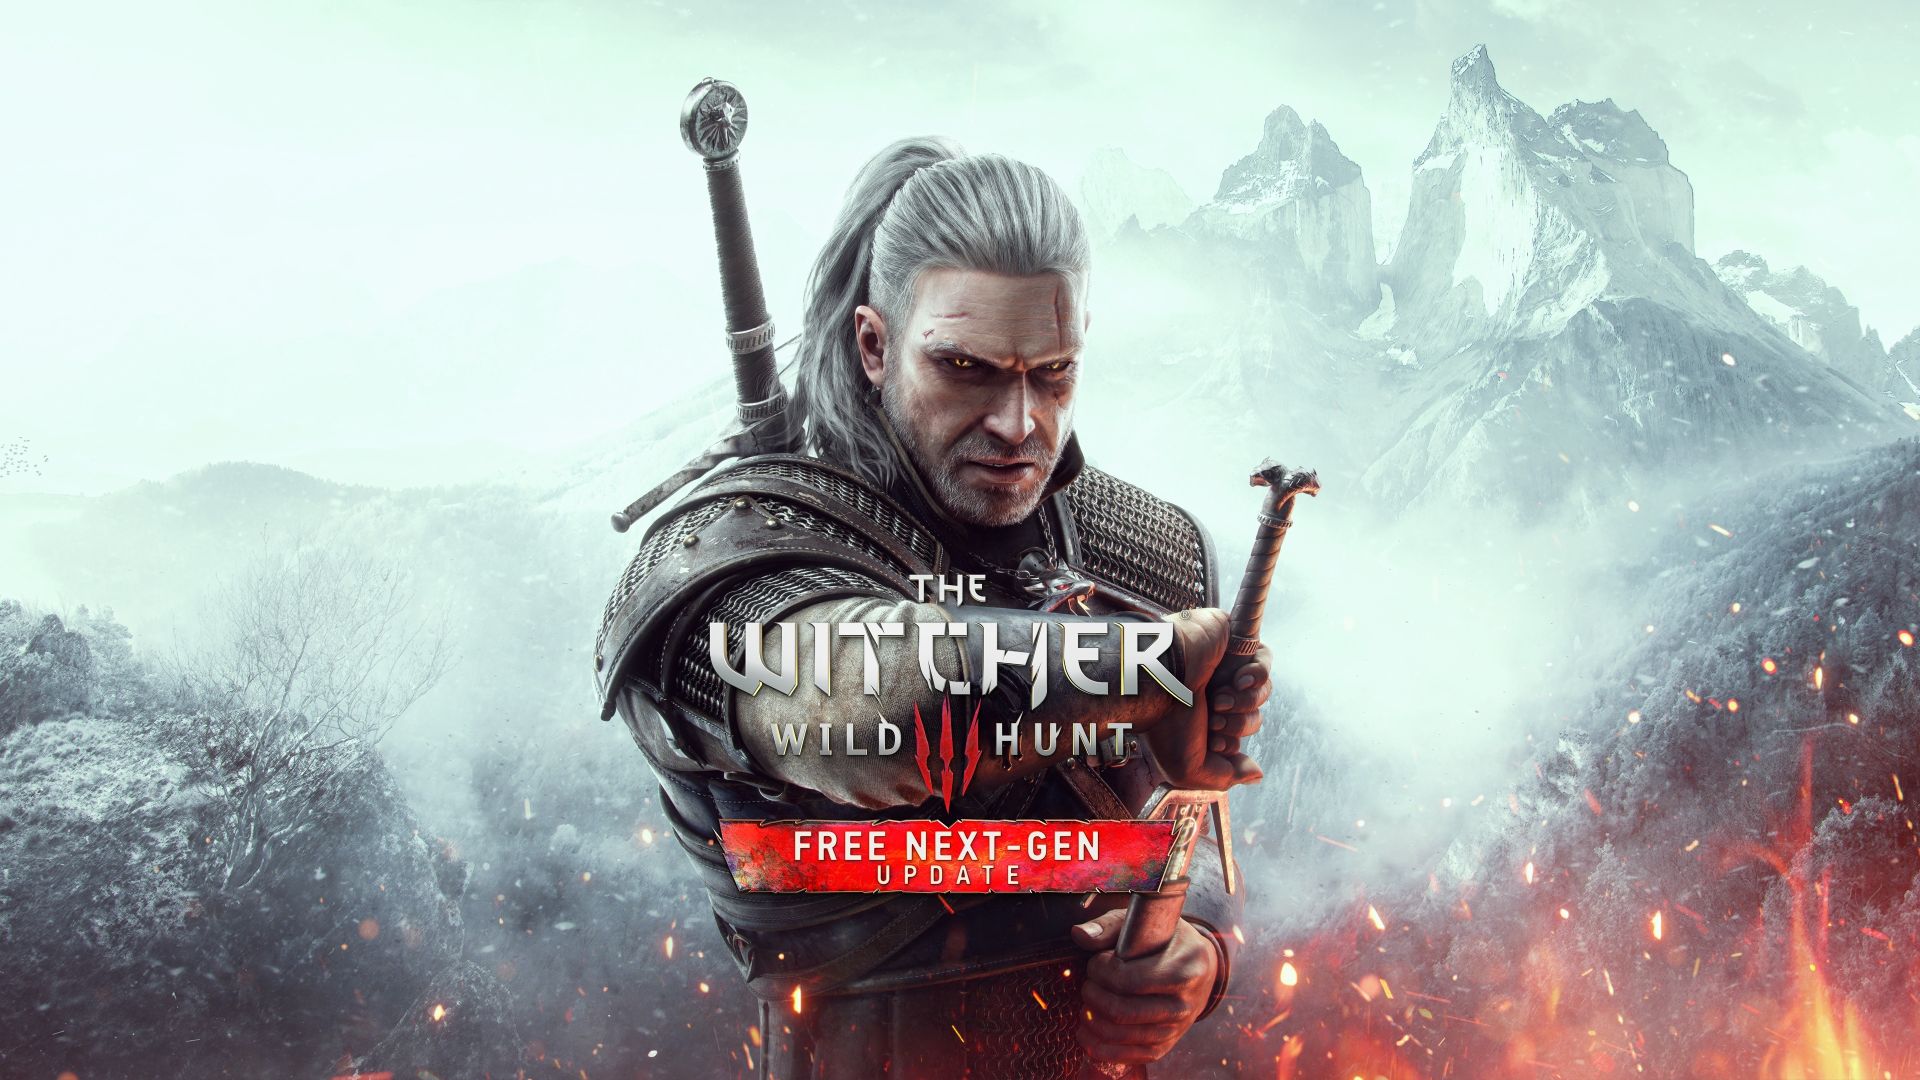 Is The Witcher 3 Next Gen update on Switch? - VideoGamer